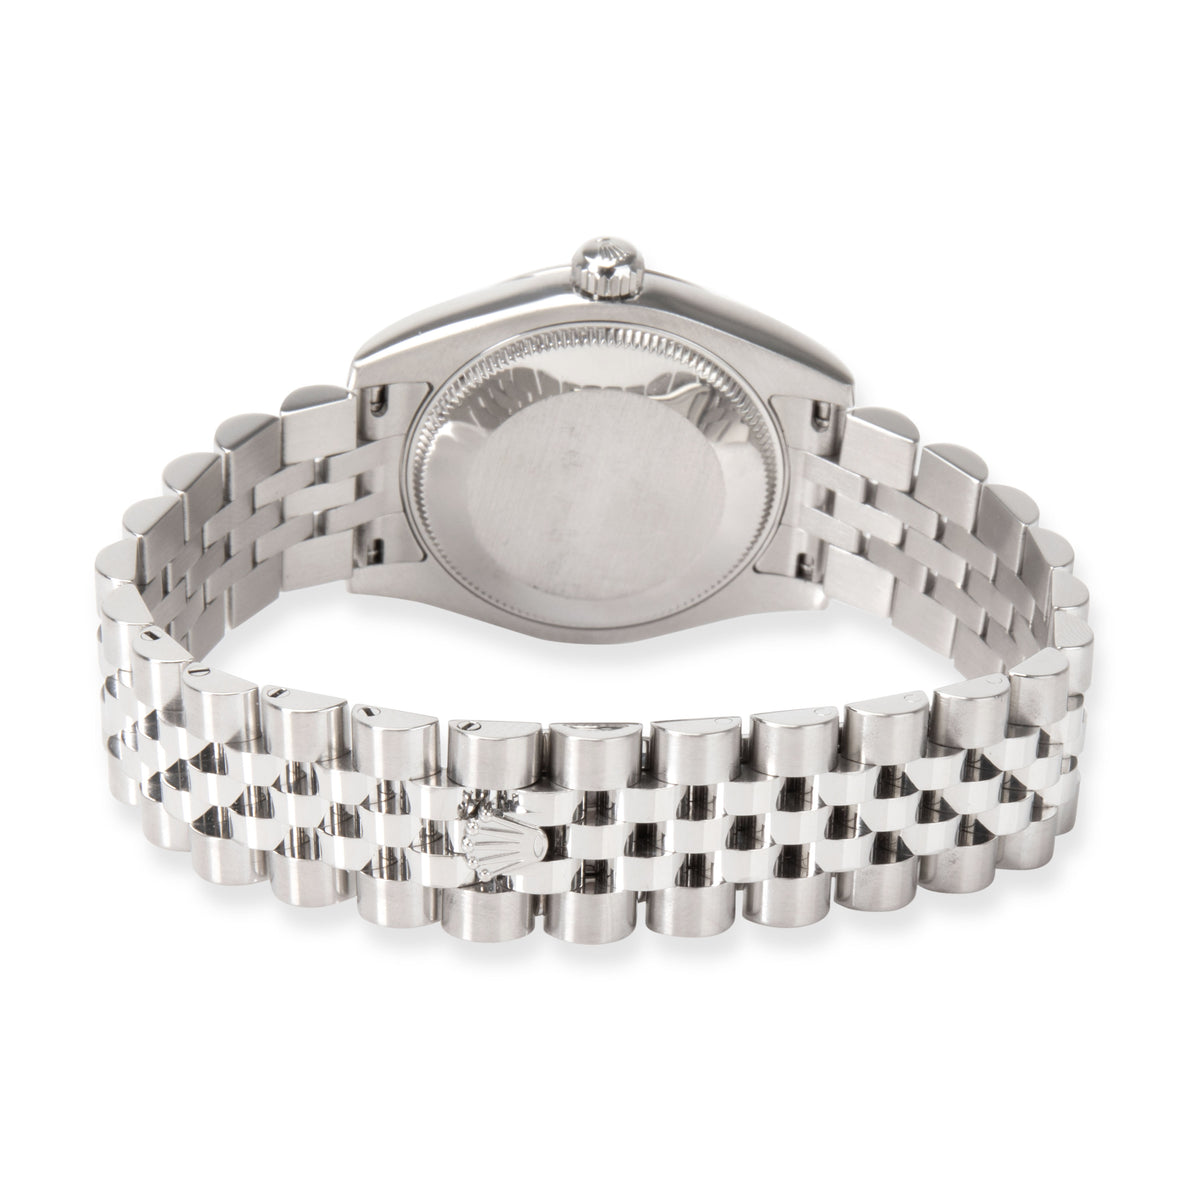 Rolex Datejust 178274 Women's Watch in 18kt Stainless Steel/White Gold